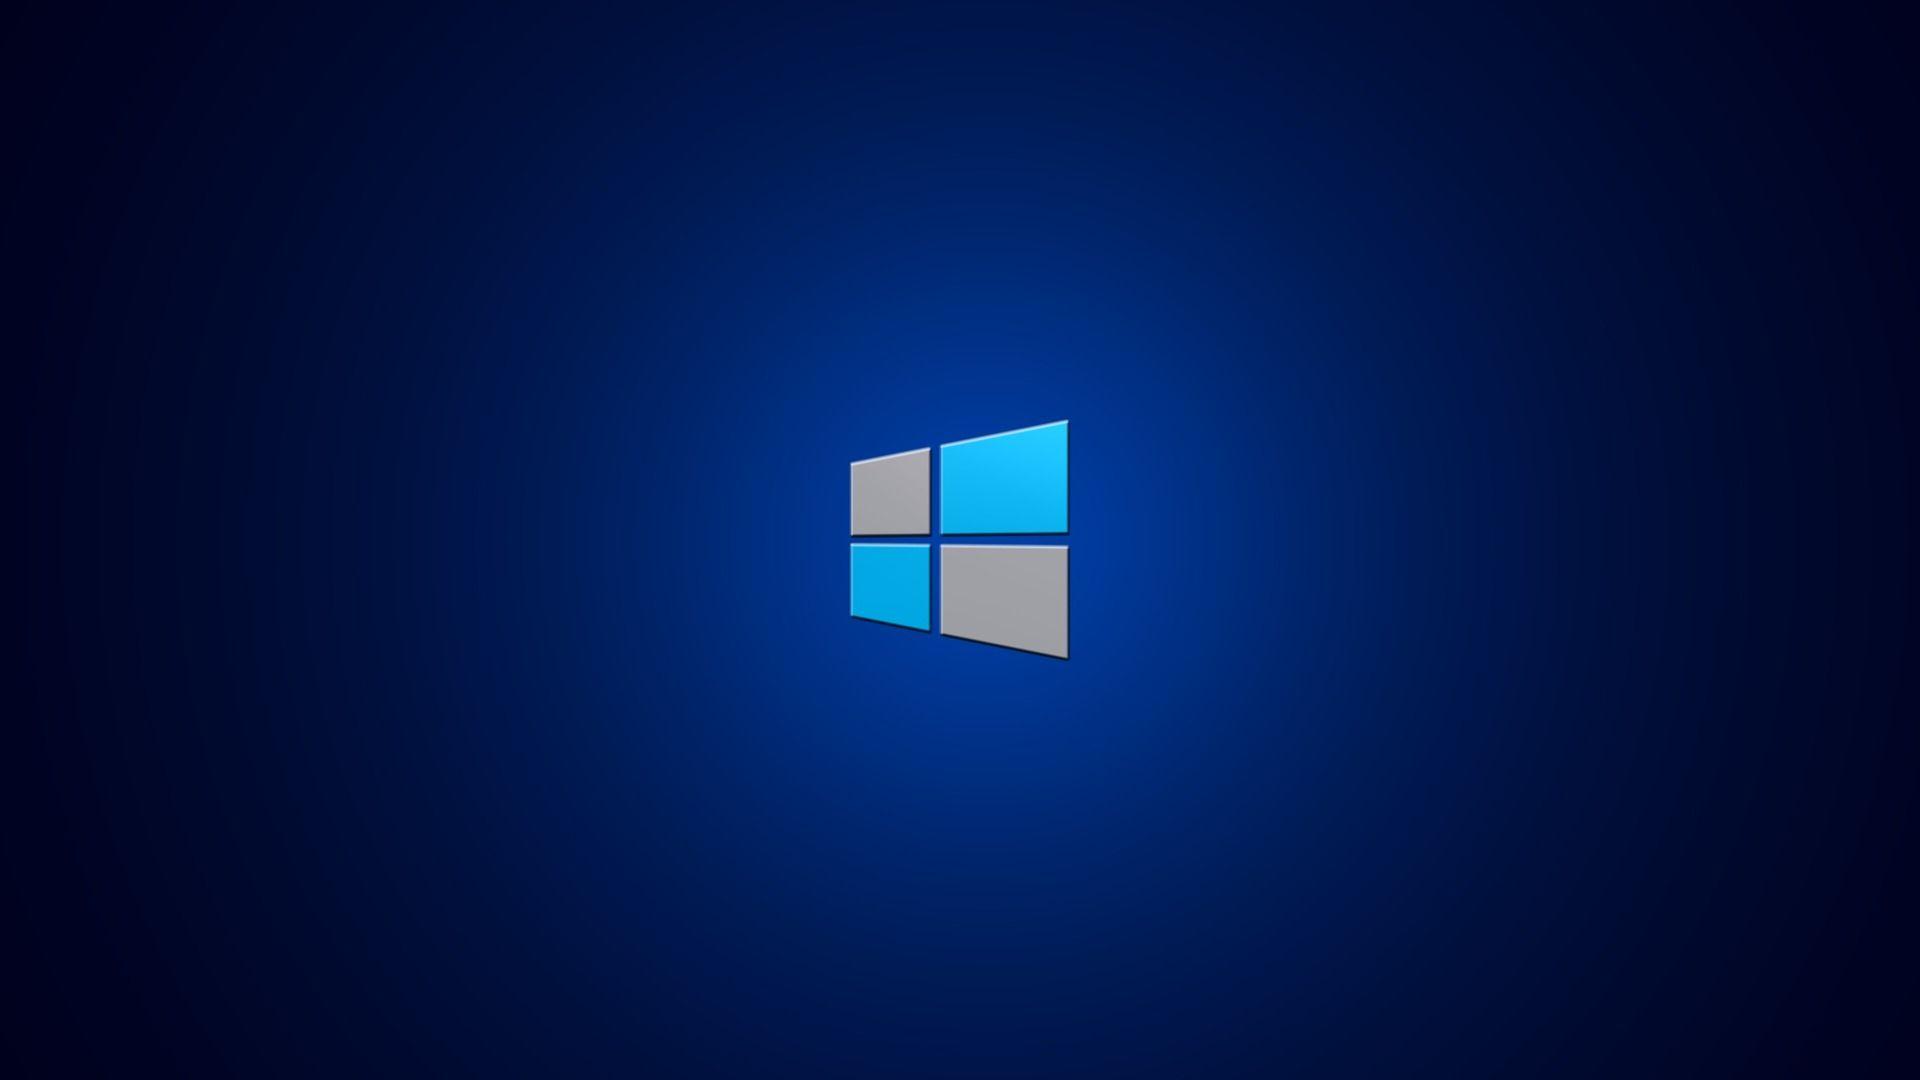 1080P Logo - Windows 8 Minimal Official Logo 1080p HD Wallpaper 1080p HD. stuff